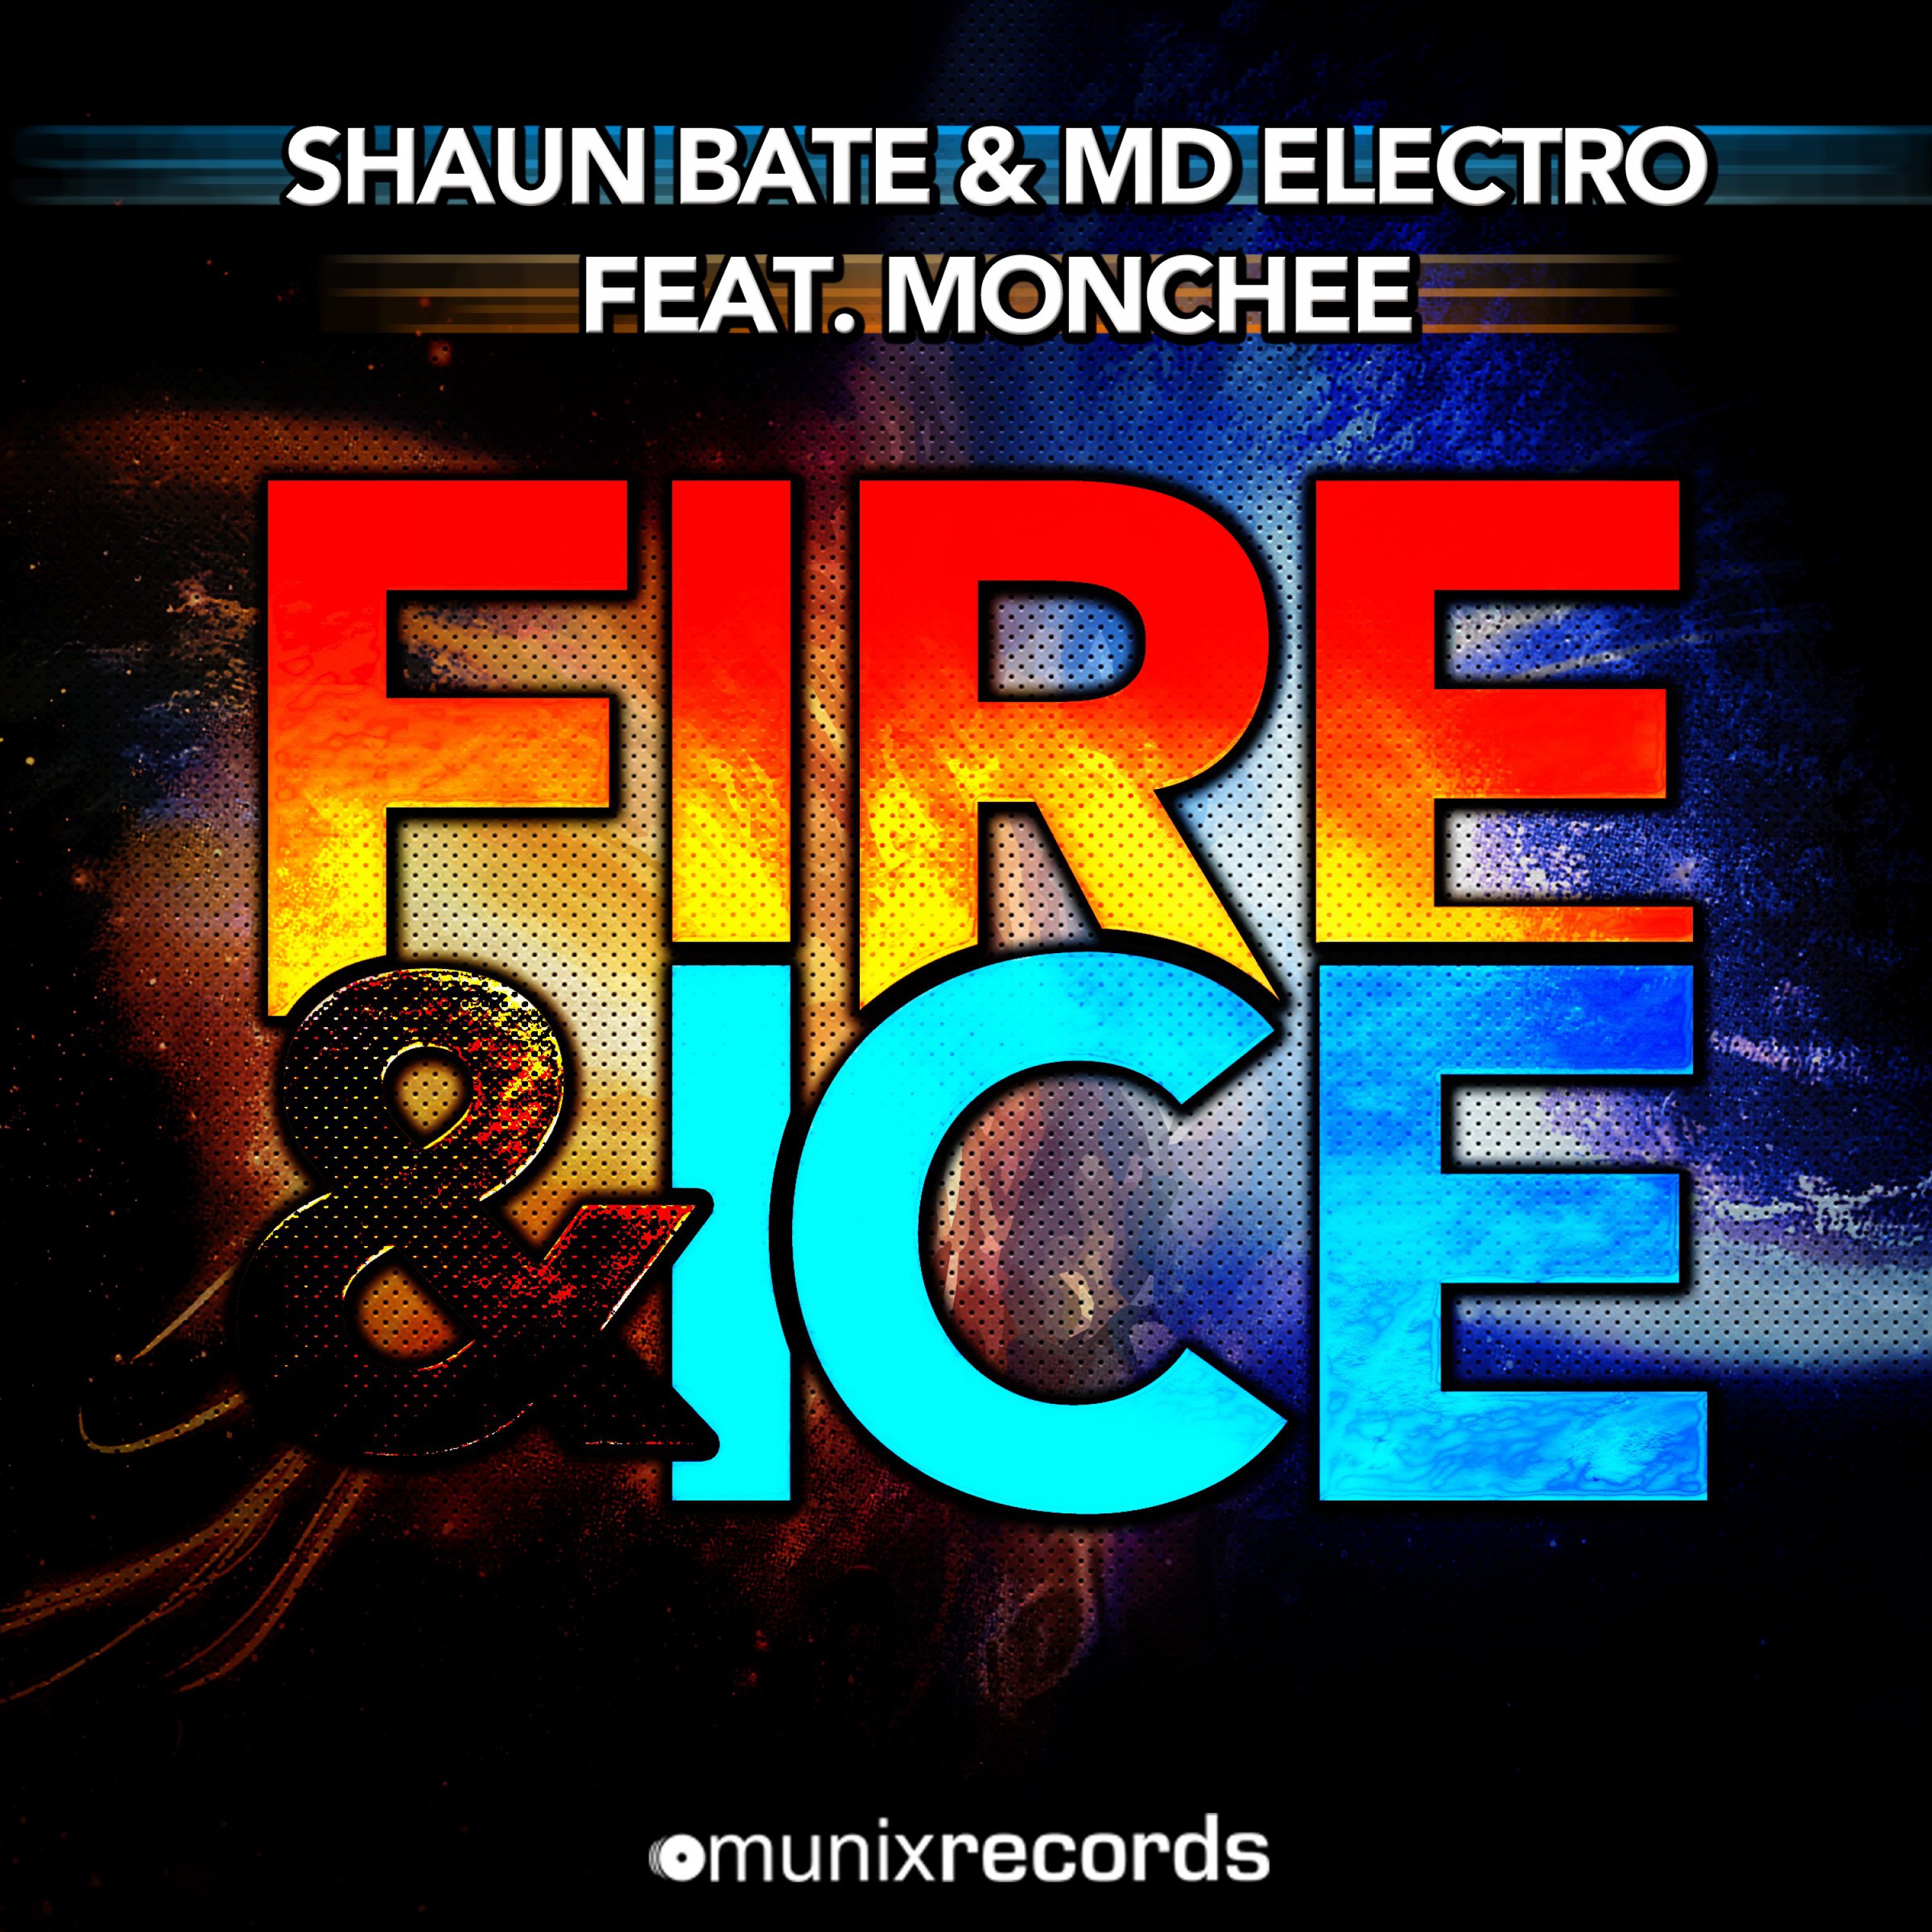 Fire & Ice (Original Mix)